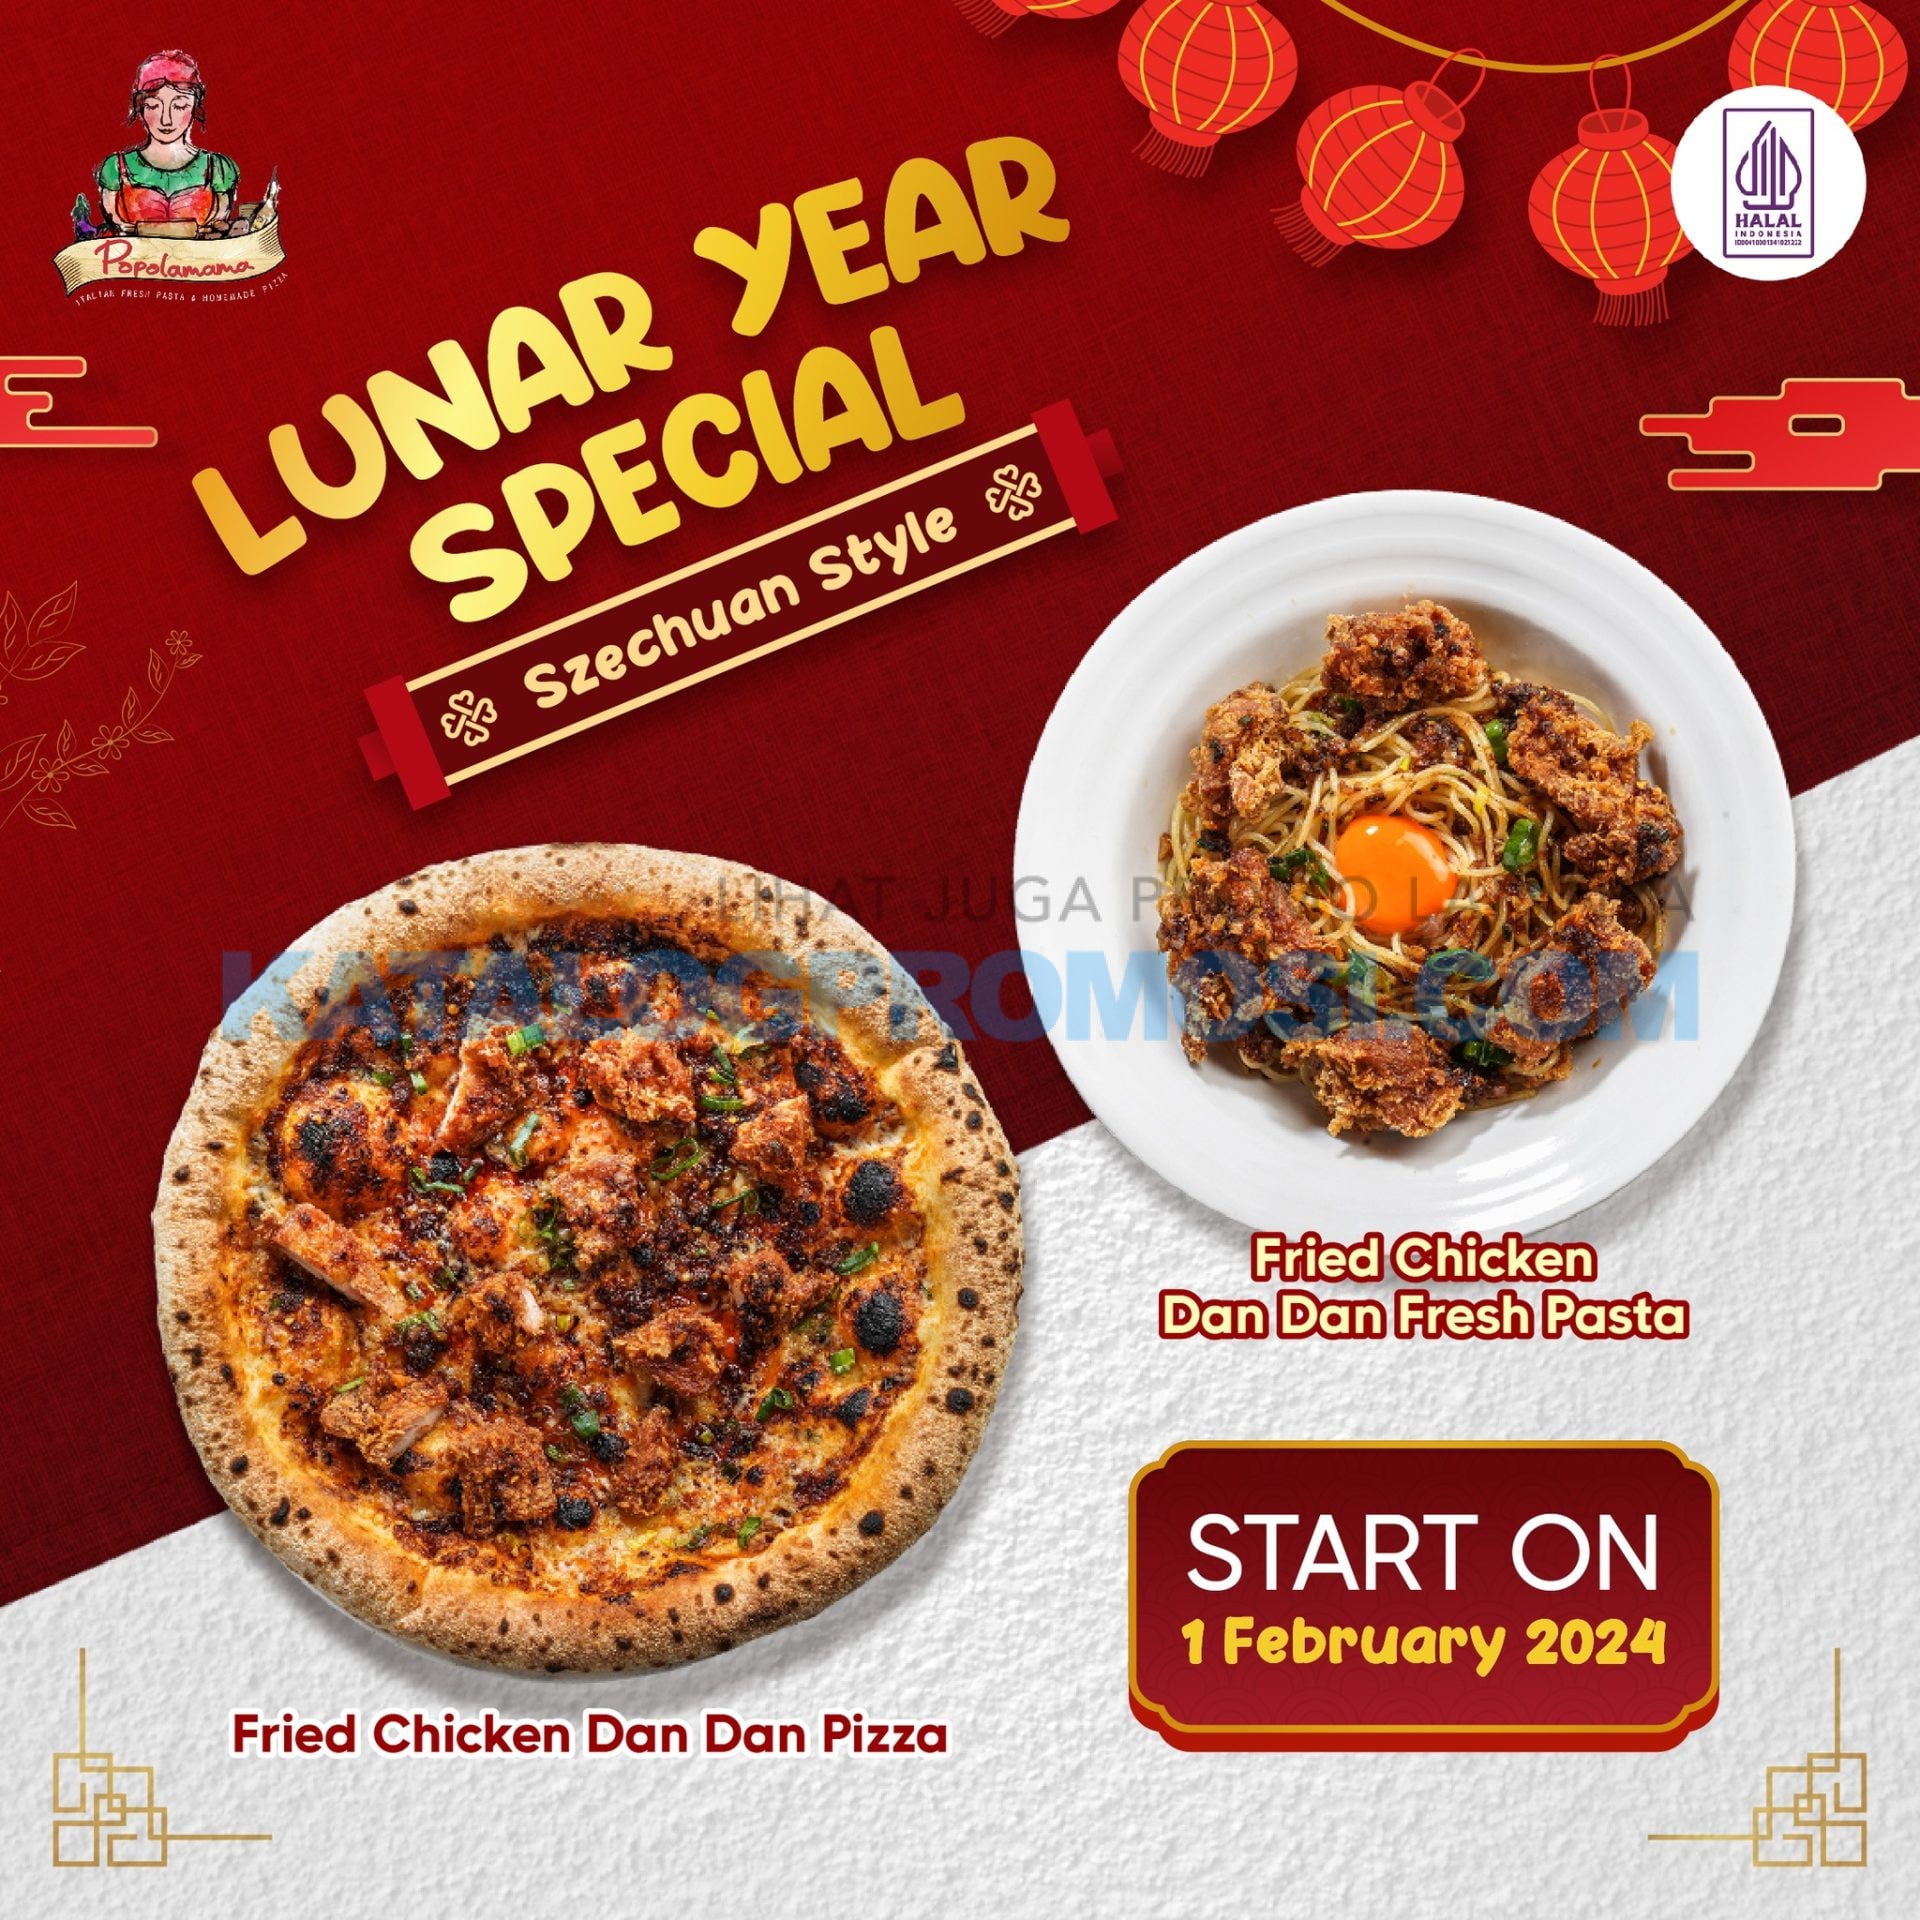 New! Popolamama Lunar Year Special - Fried Chicken Dan Dan Fresh Pasta & Pizza